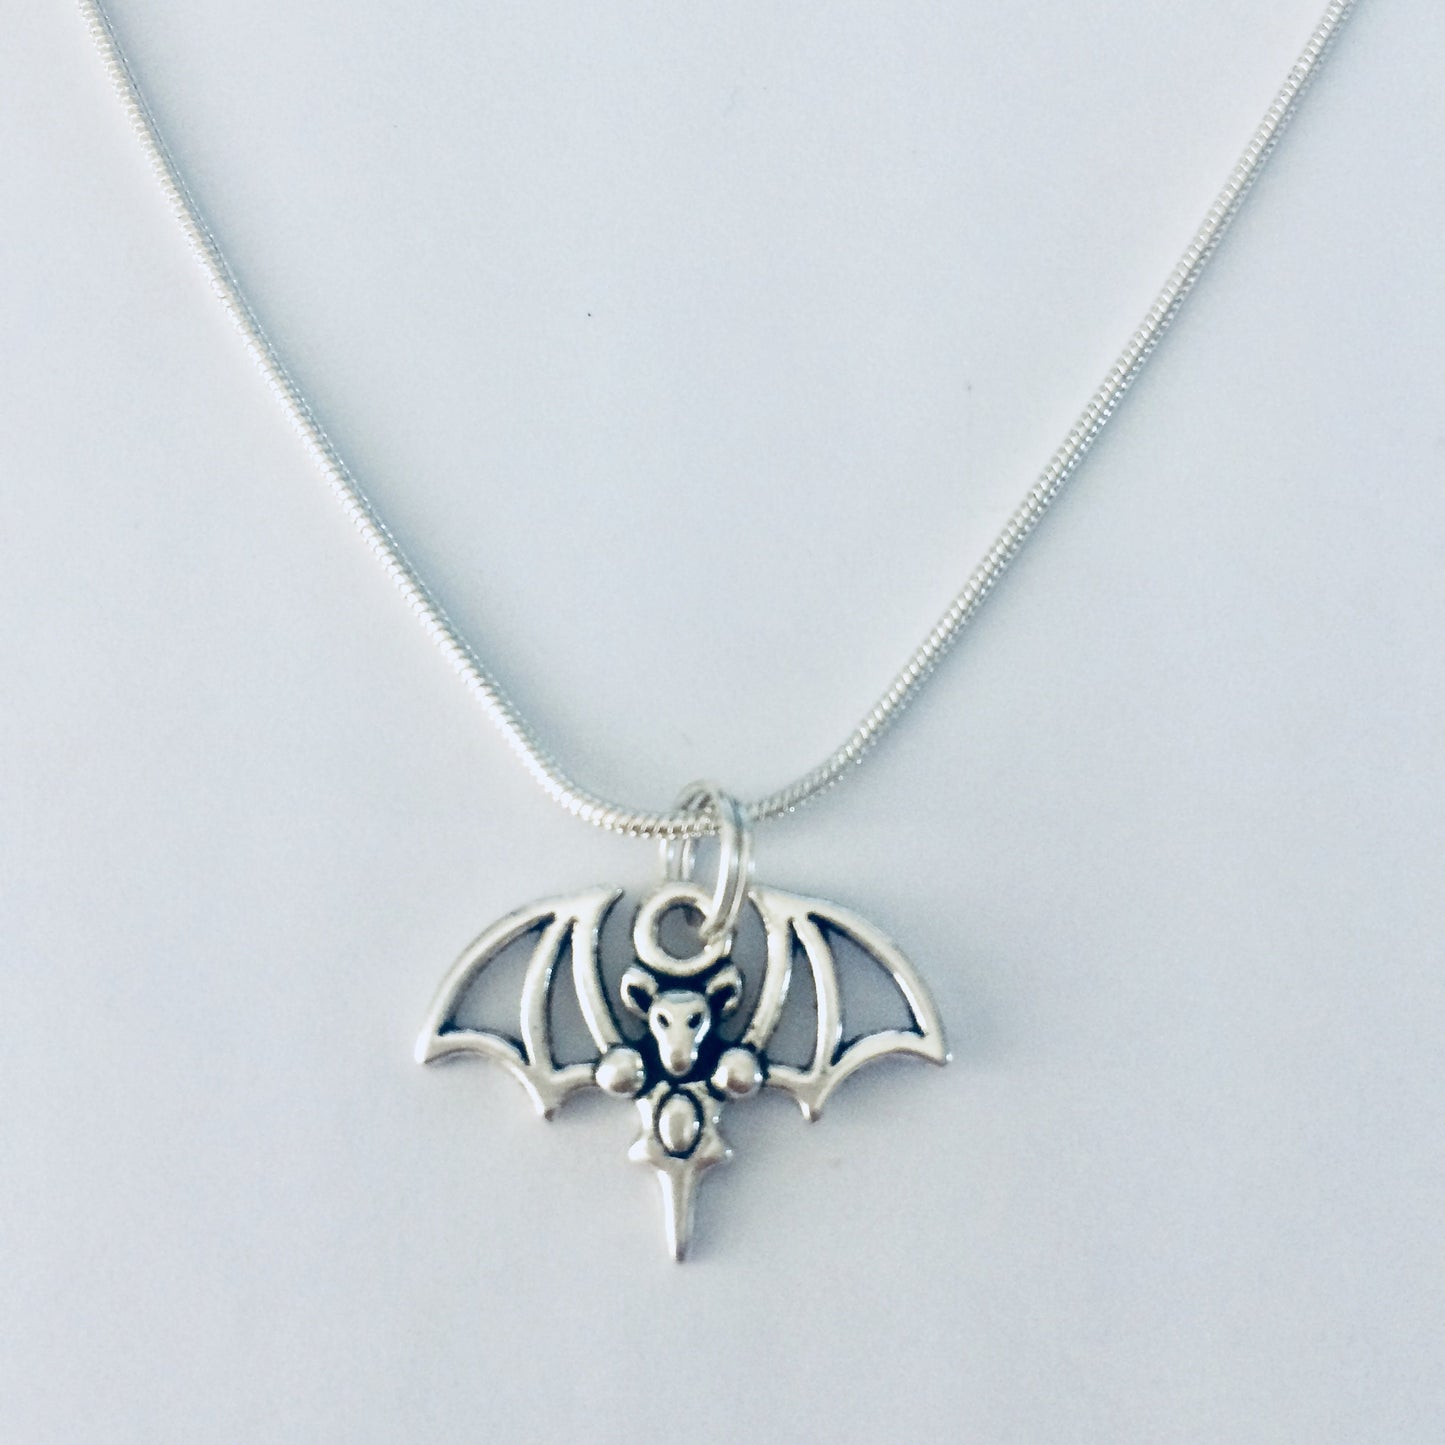 Bat Necklace, Witchy Necklace, Halloween Necklace, Bat Charm Necklace, Vampire Necklace, Vampire Jewellery, Vampire Bat, Bat Jewelry.